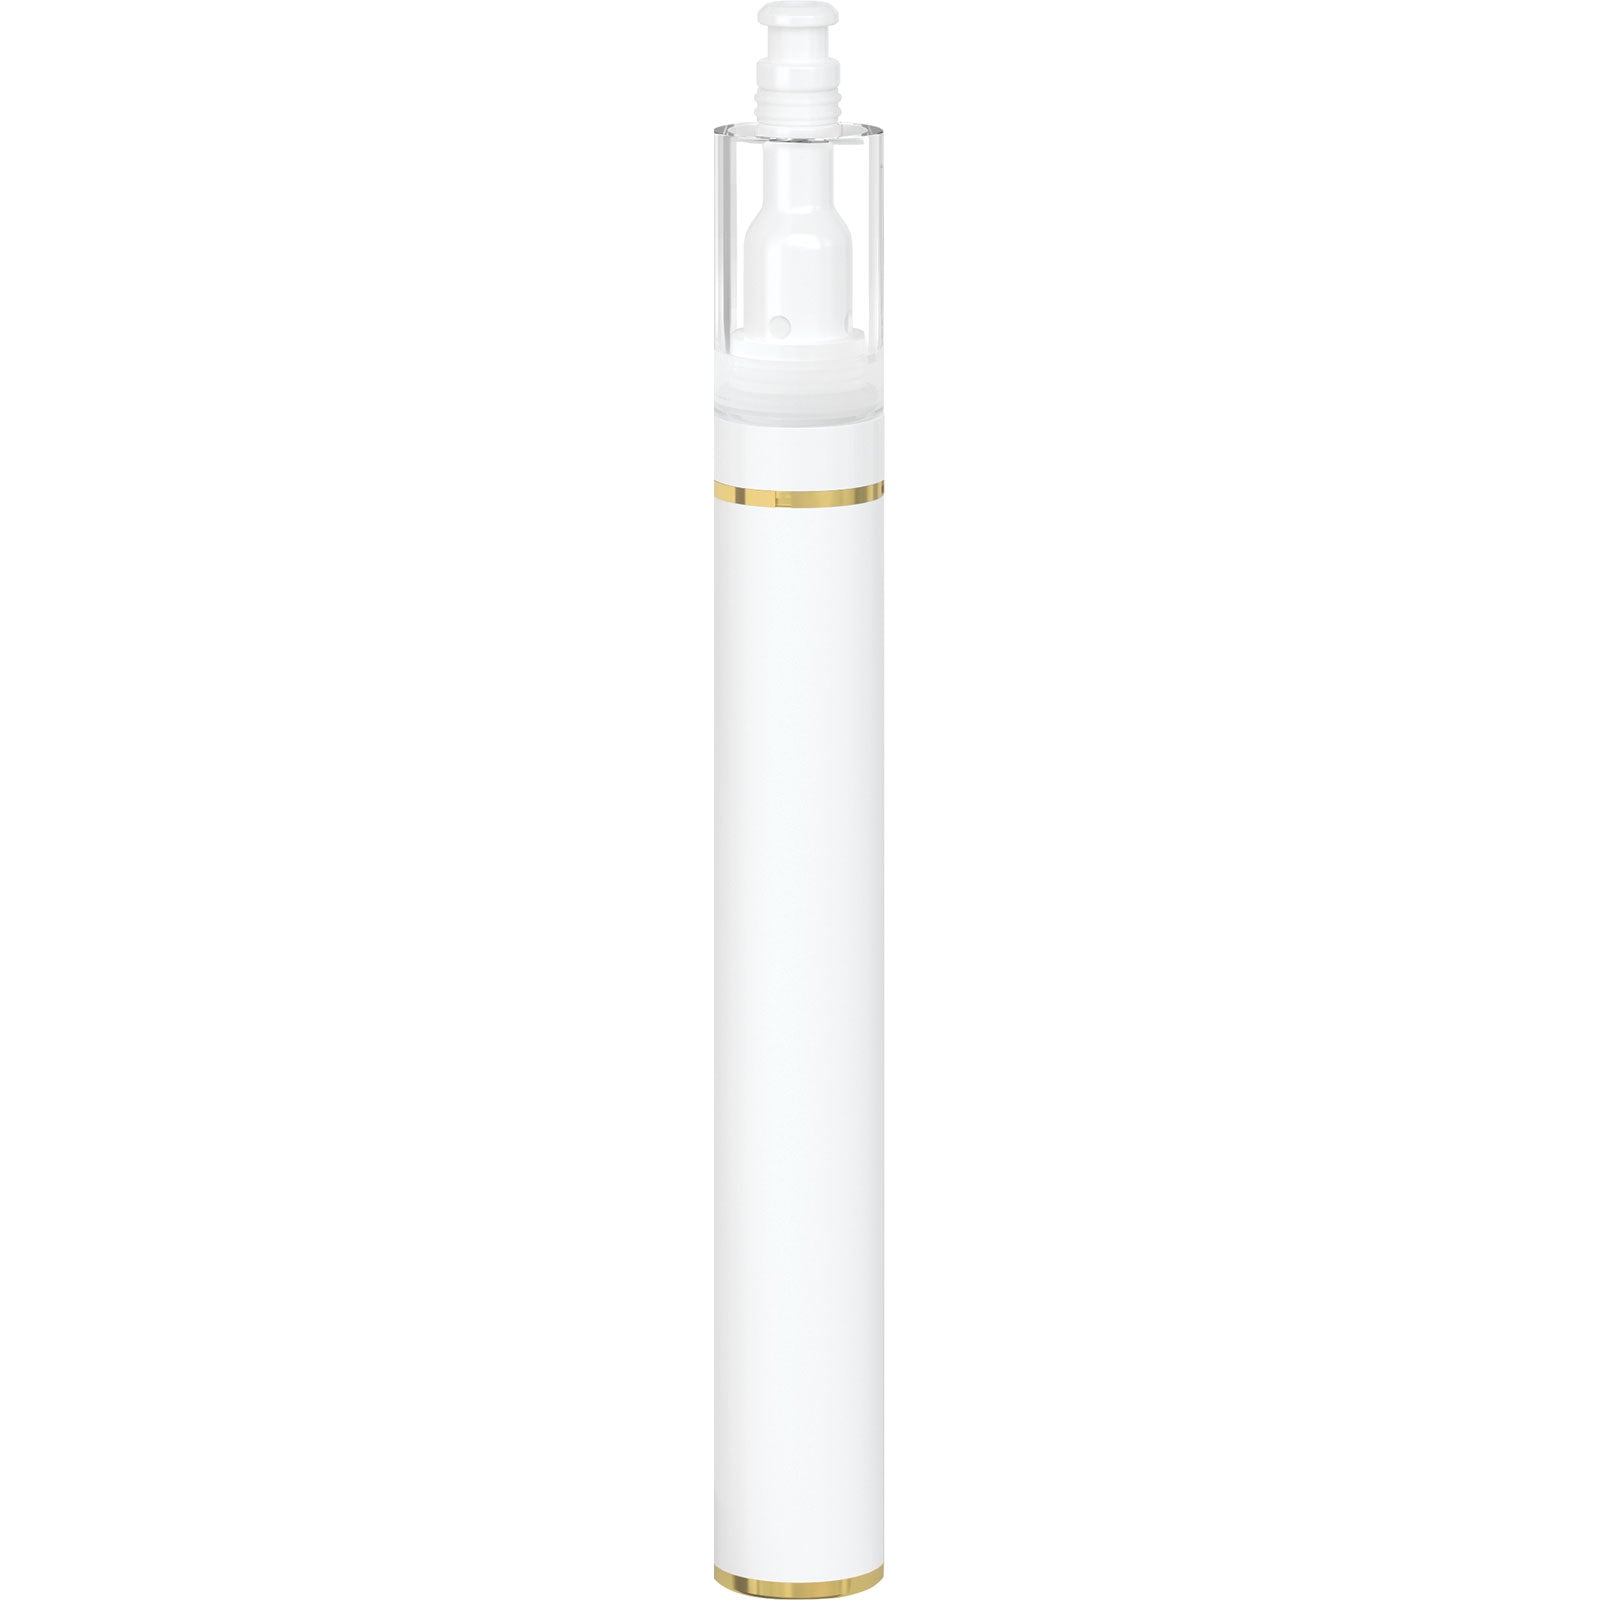 0.3ml / 1.7mm - Base (White) / Single Unit ACTIVE EZ Click Ceramic Pro All in One Disposable Vape